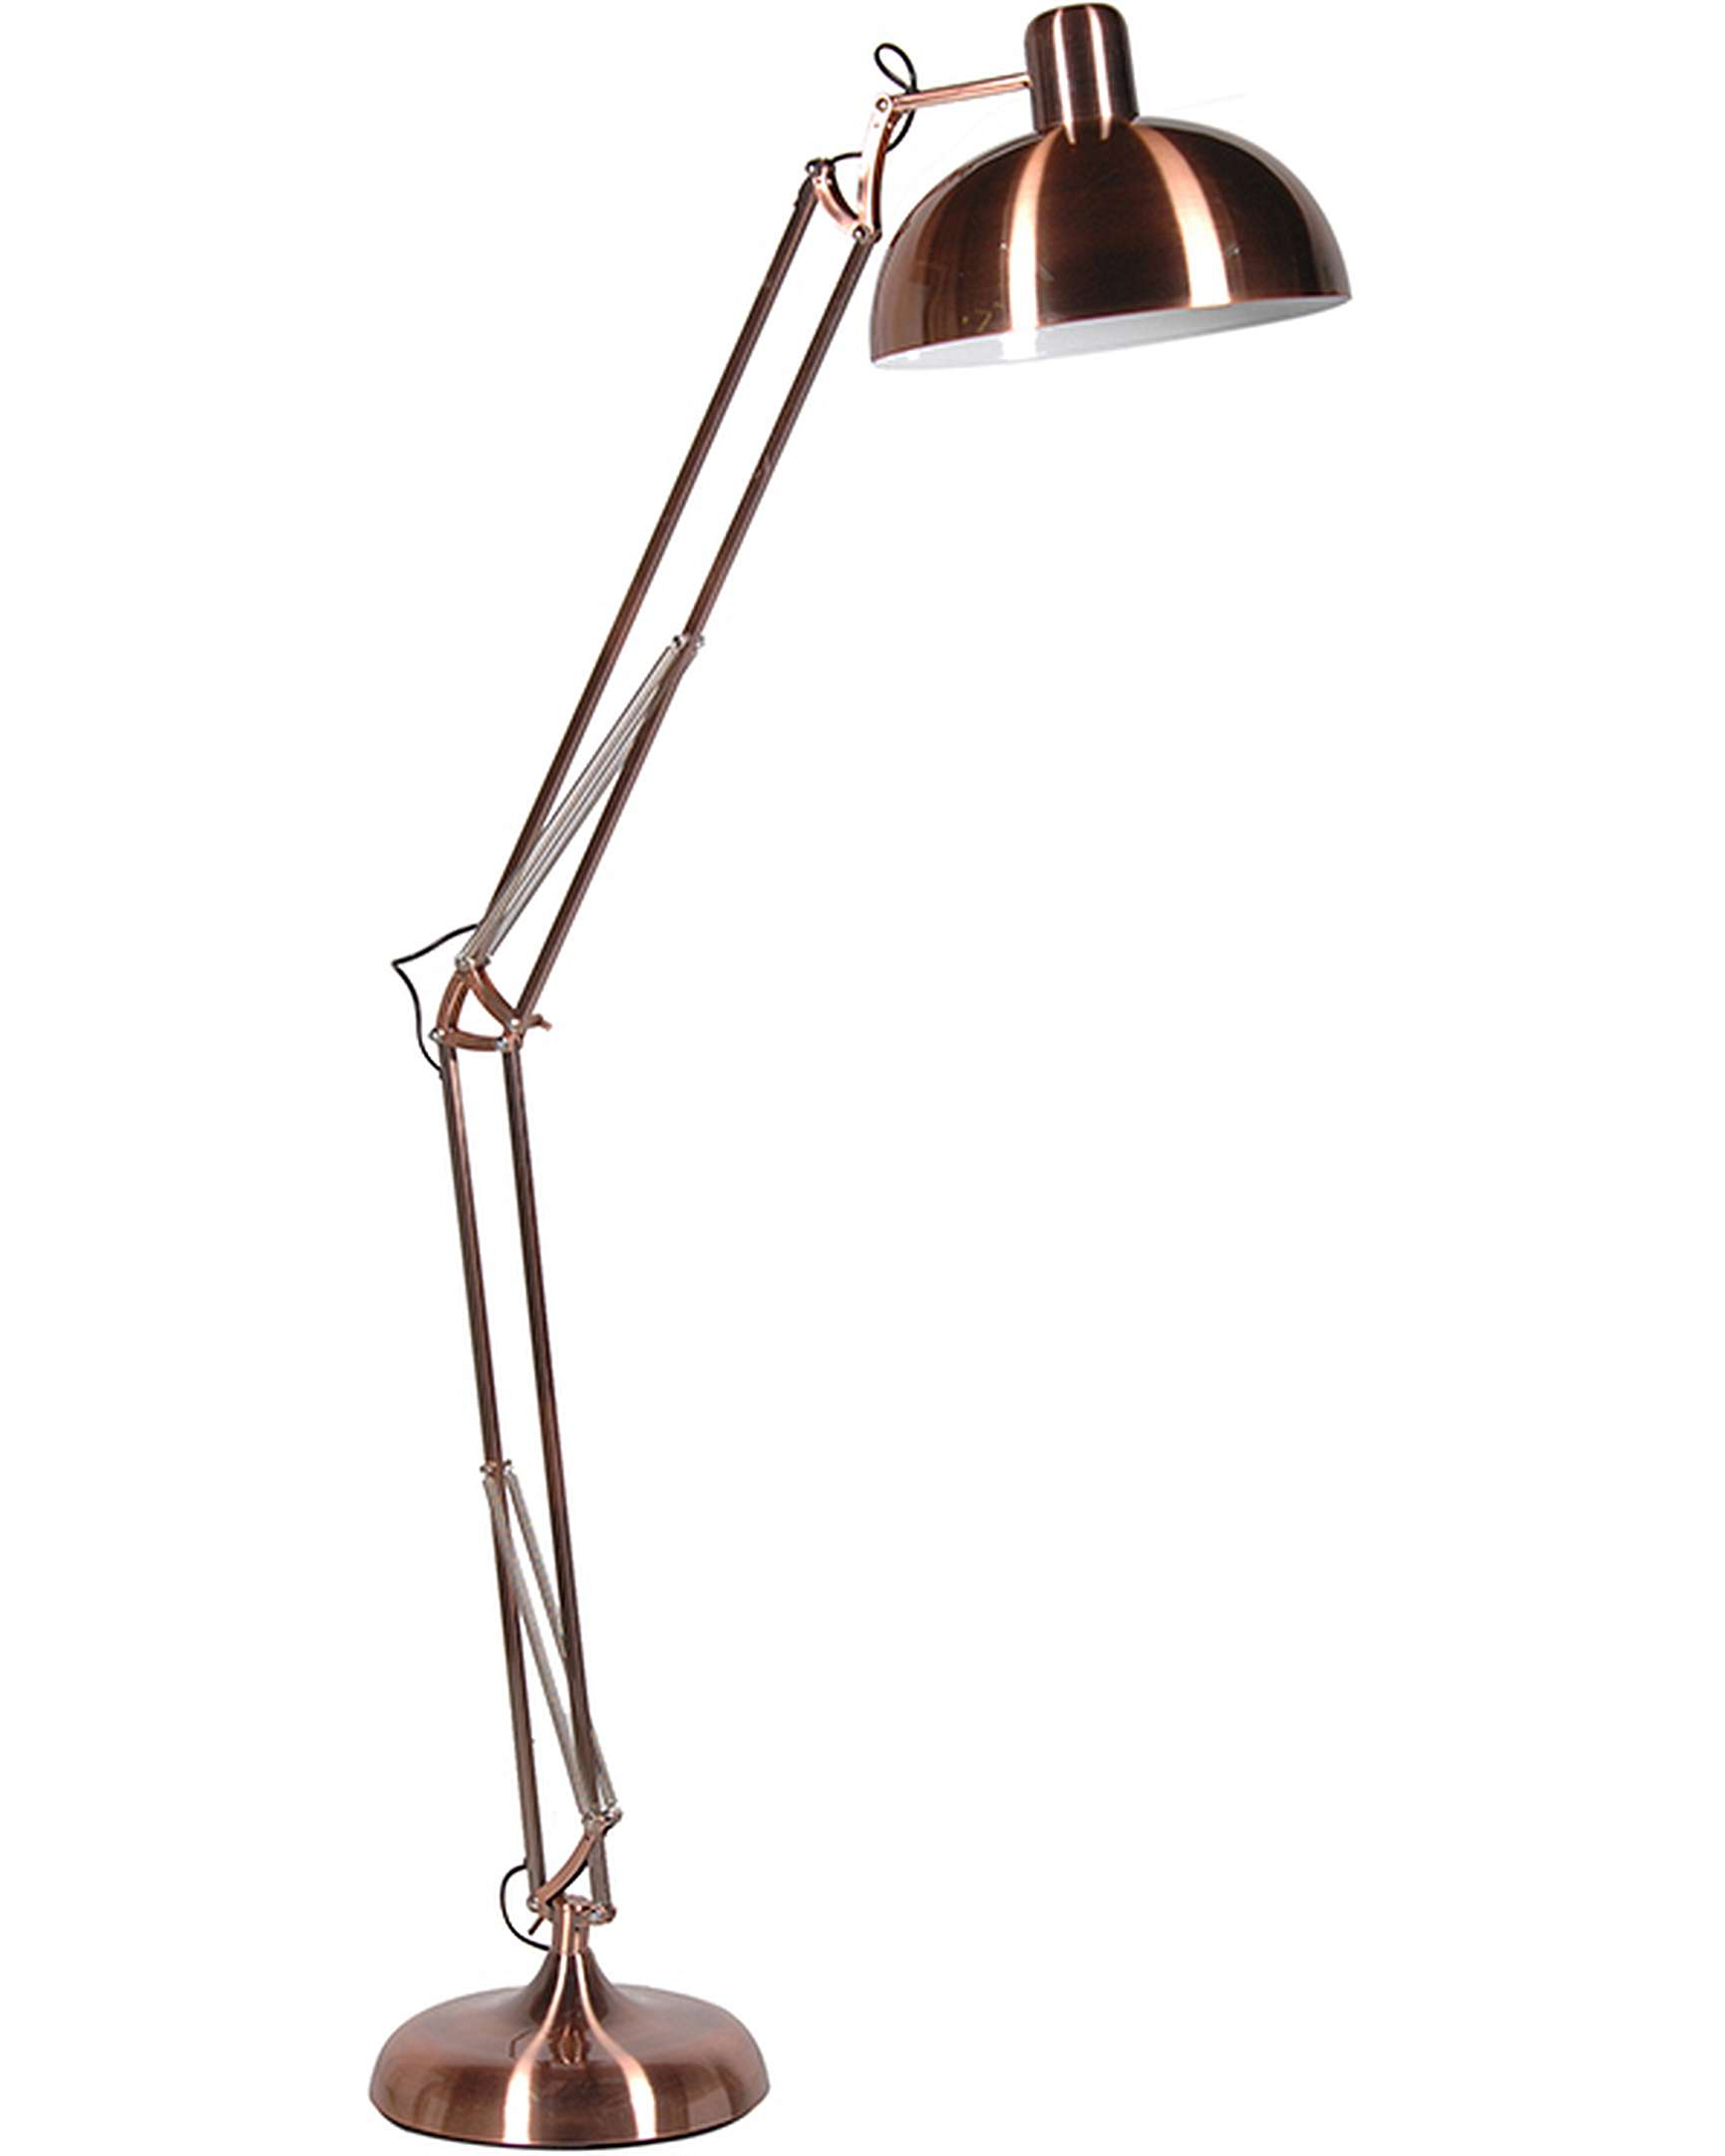 Copper Angled Floor Lamp Oliver Bonas within sizing 1730 X 2162